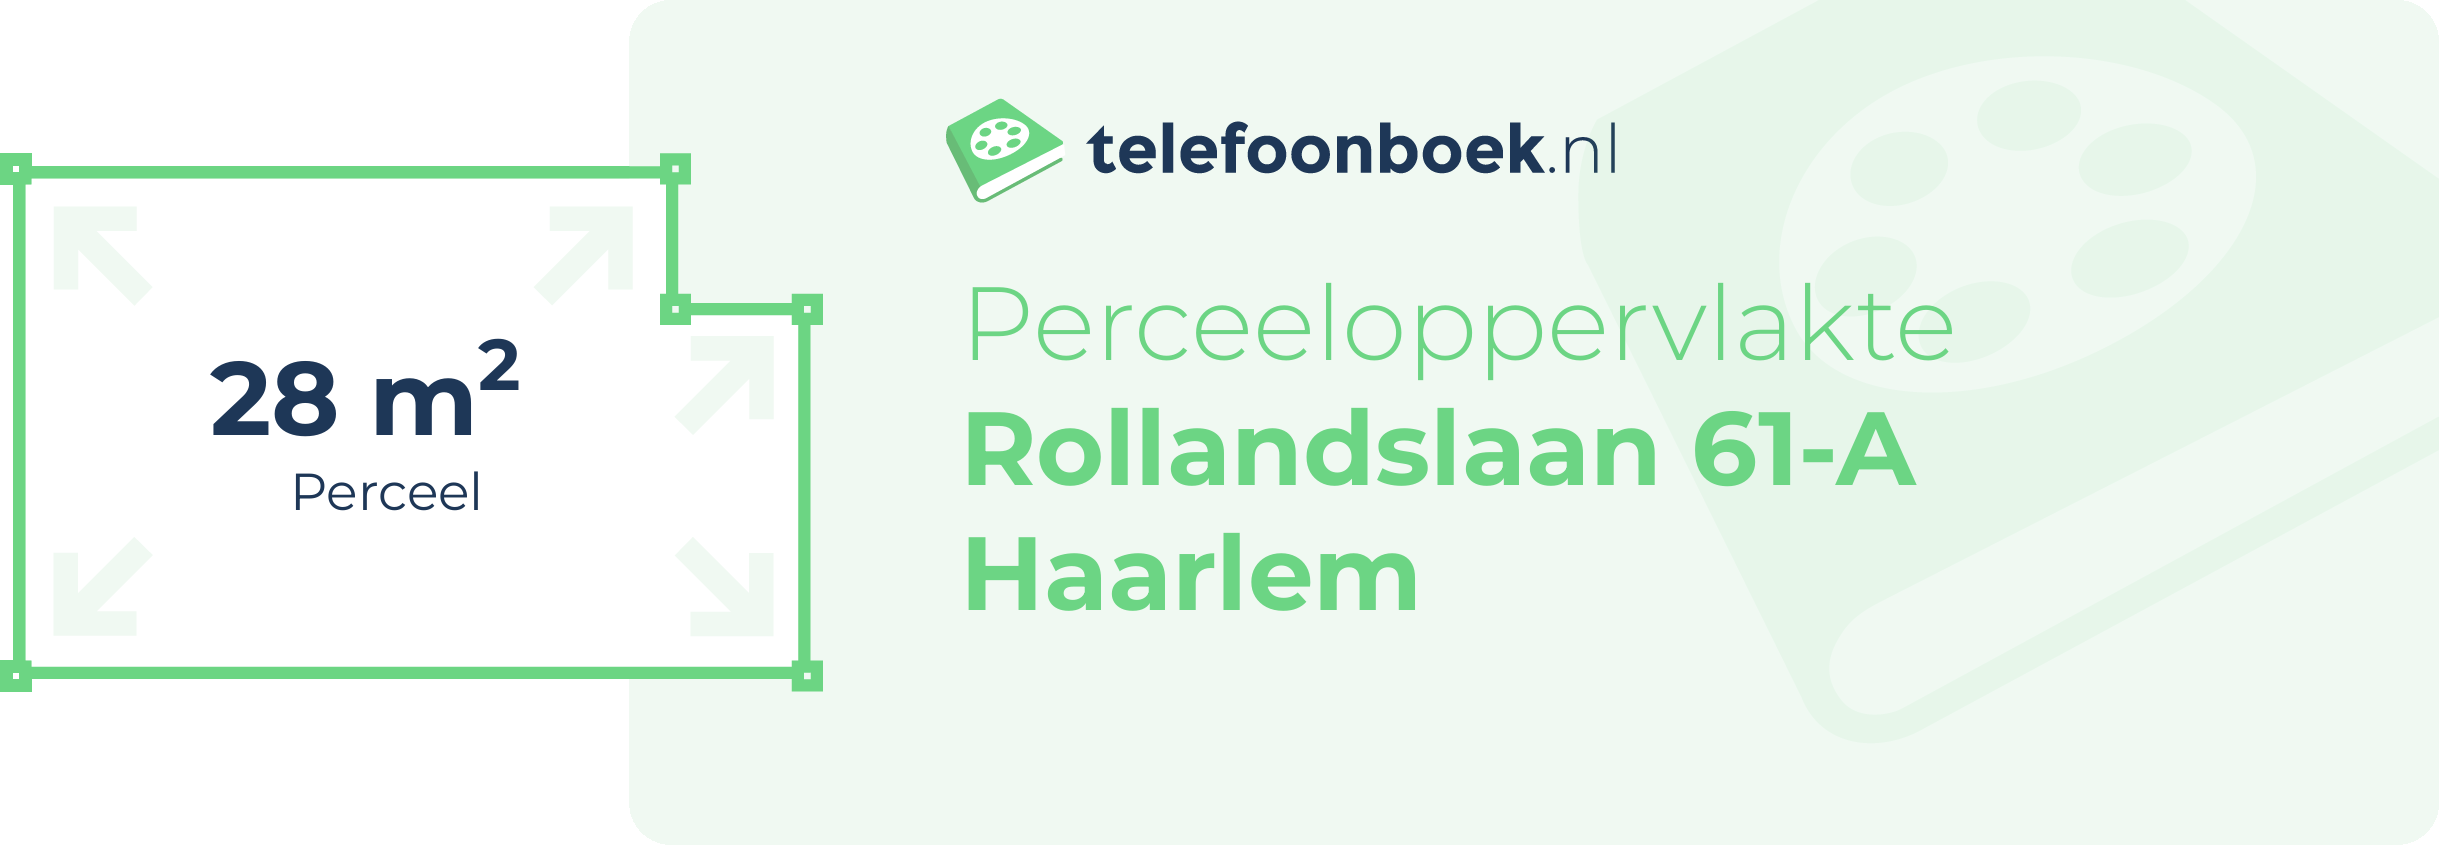 Perceeloppervlakte Rollandslaan 61-A Haarlem